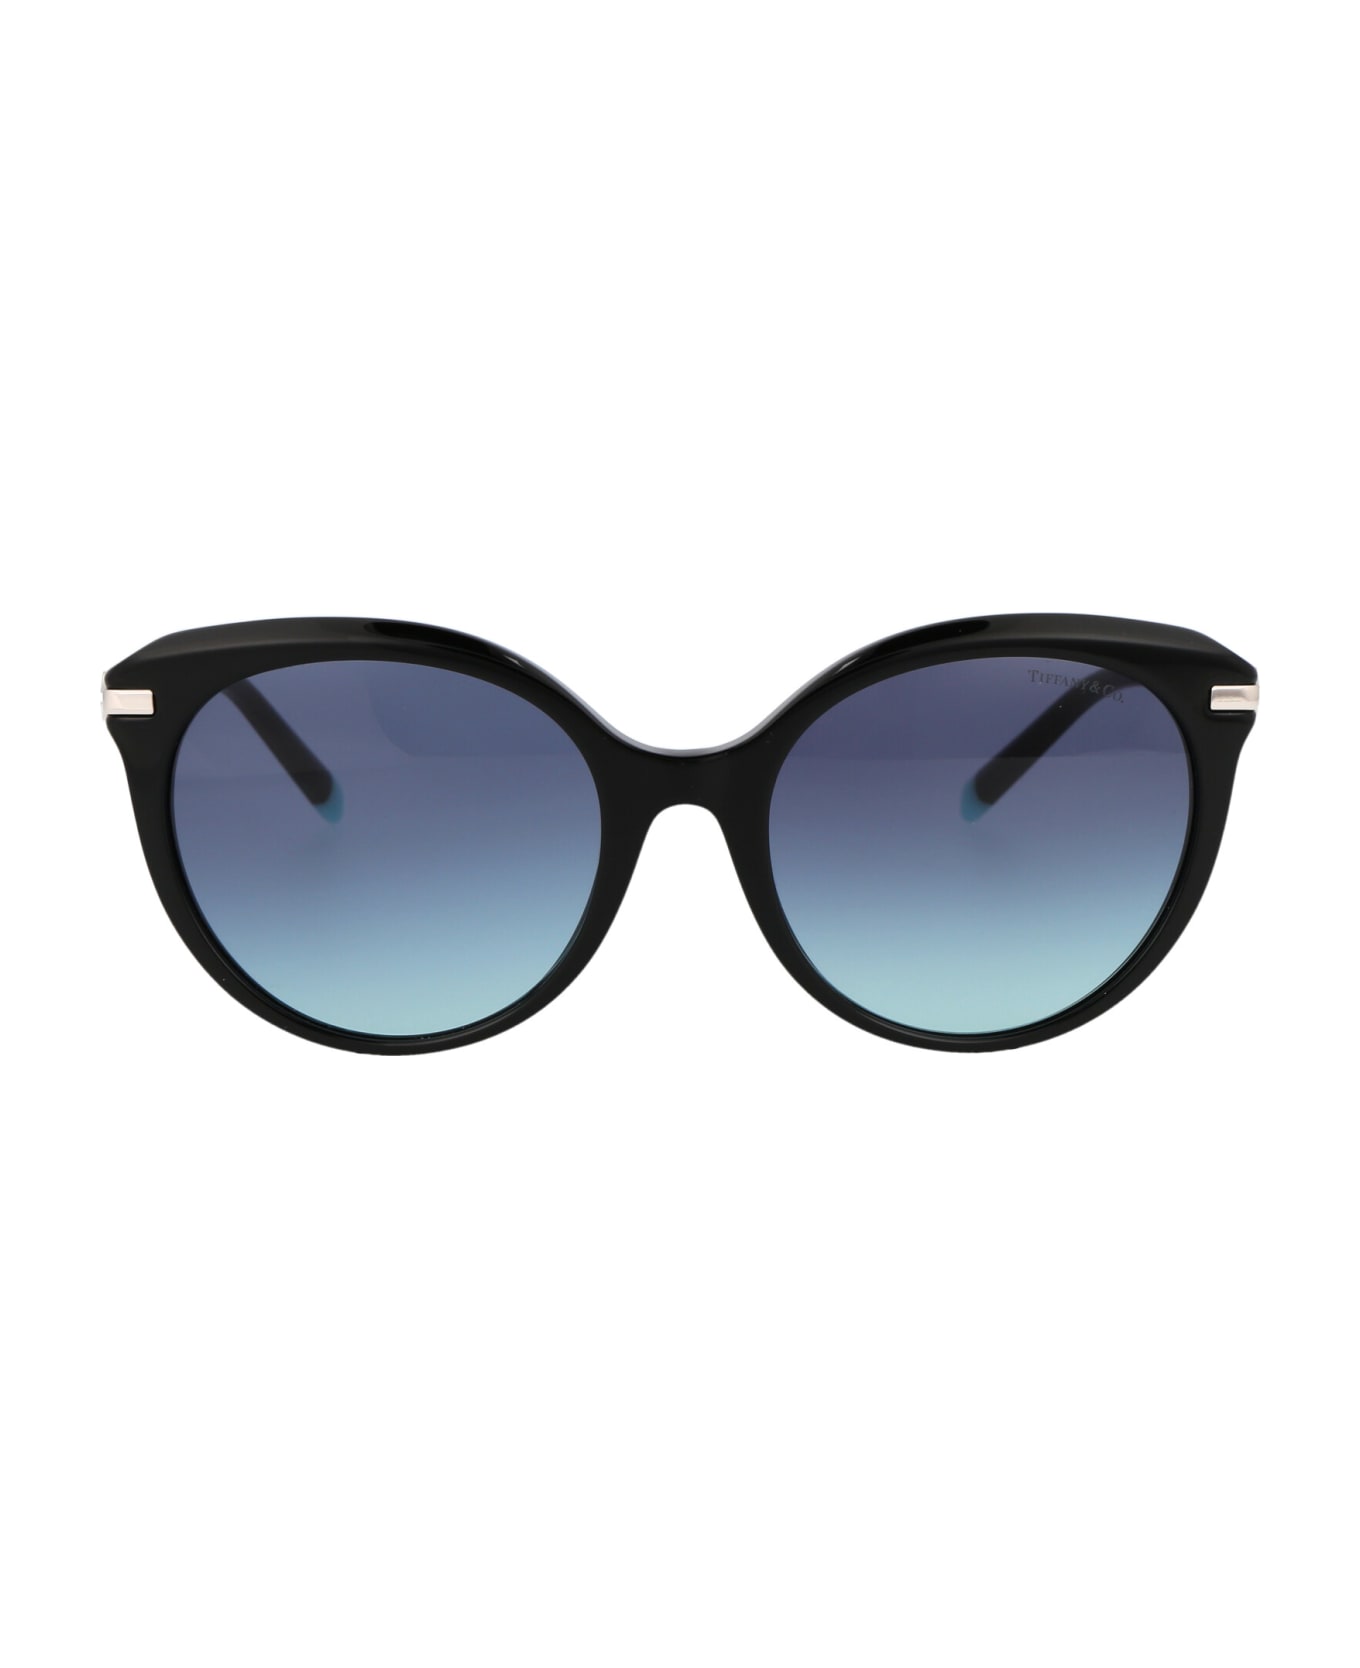 Tiffany & Co. 0tf4189b Sunglasses - 80019S Black